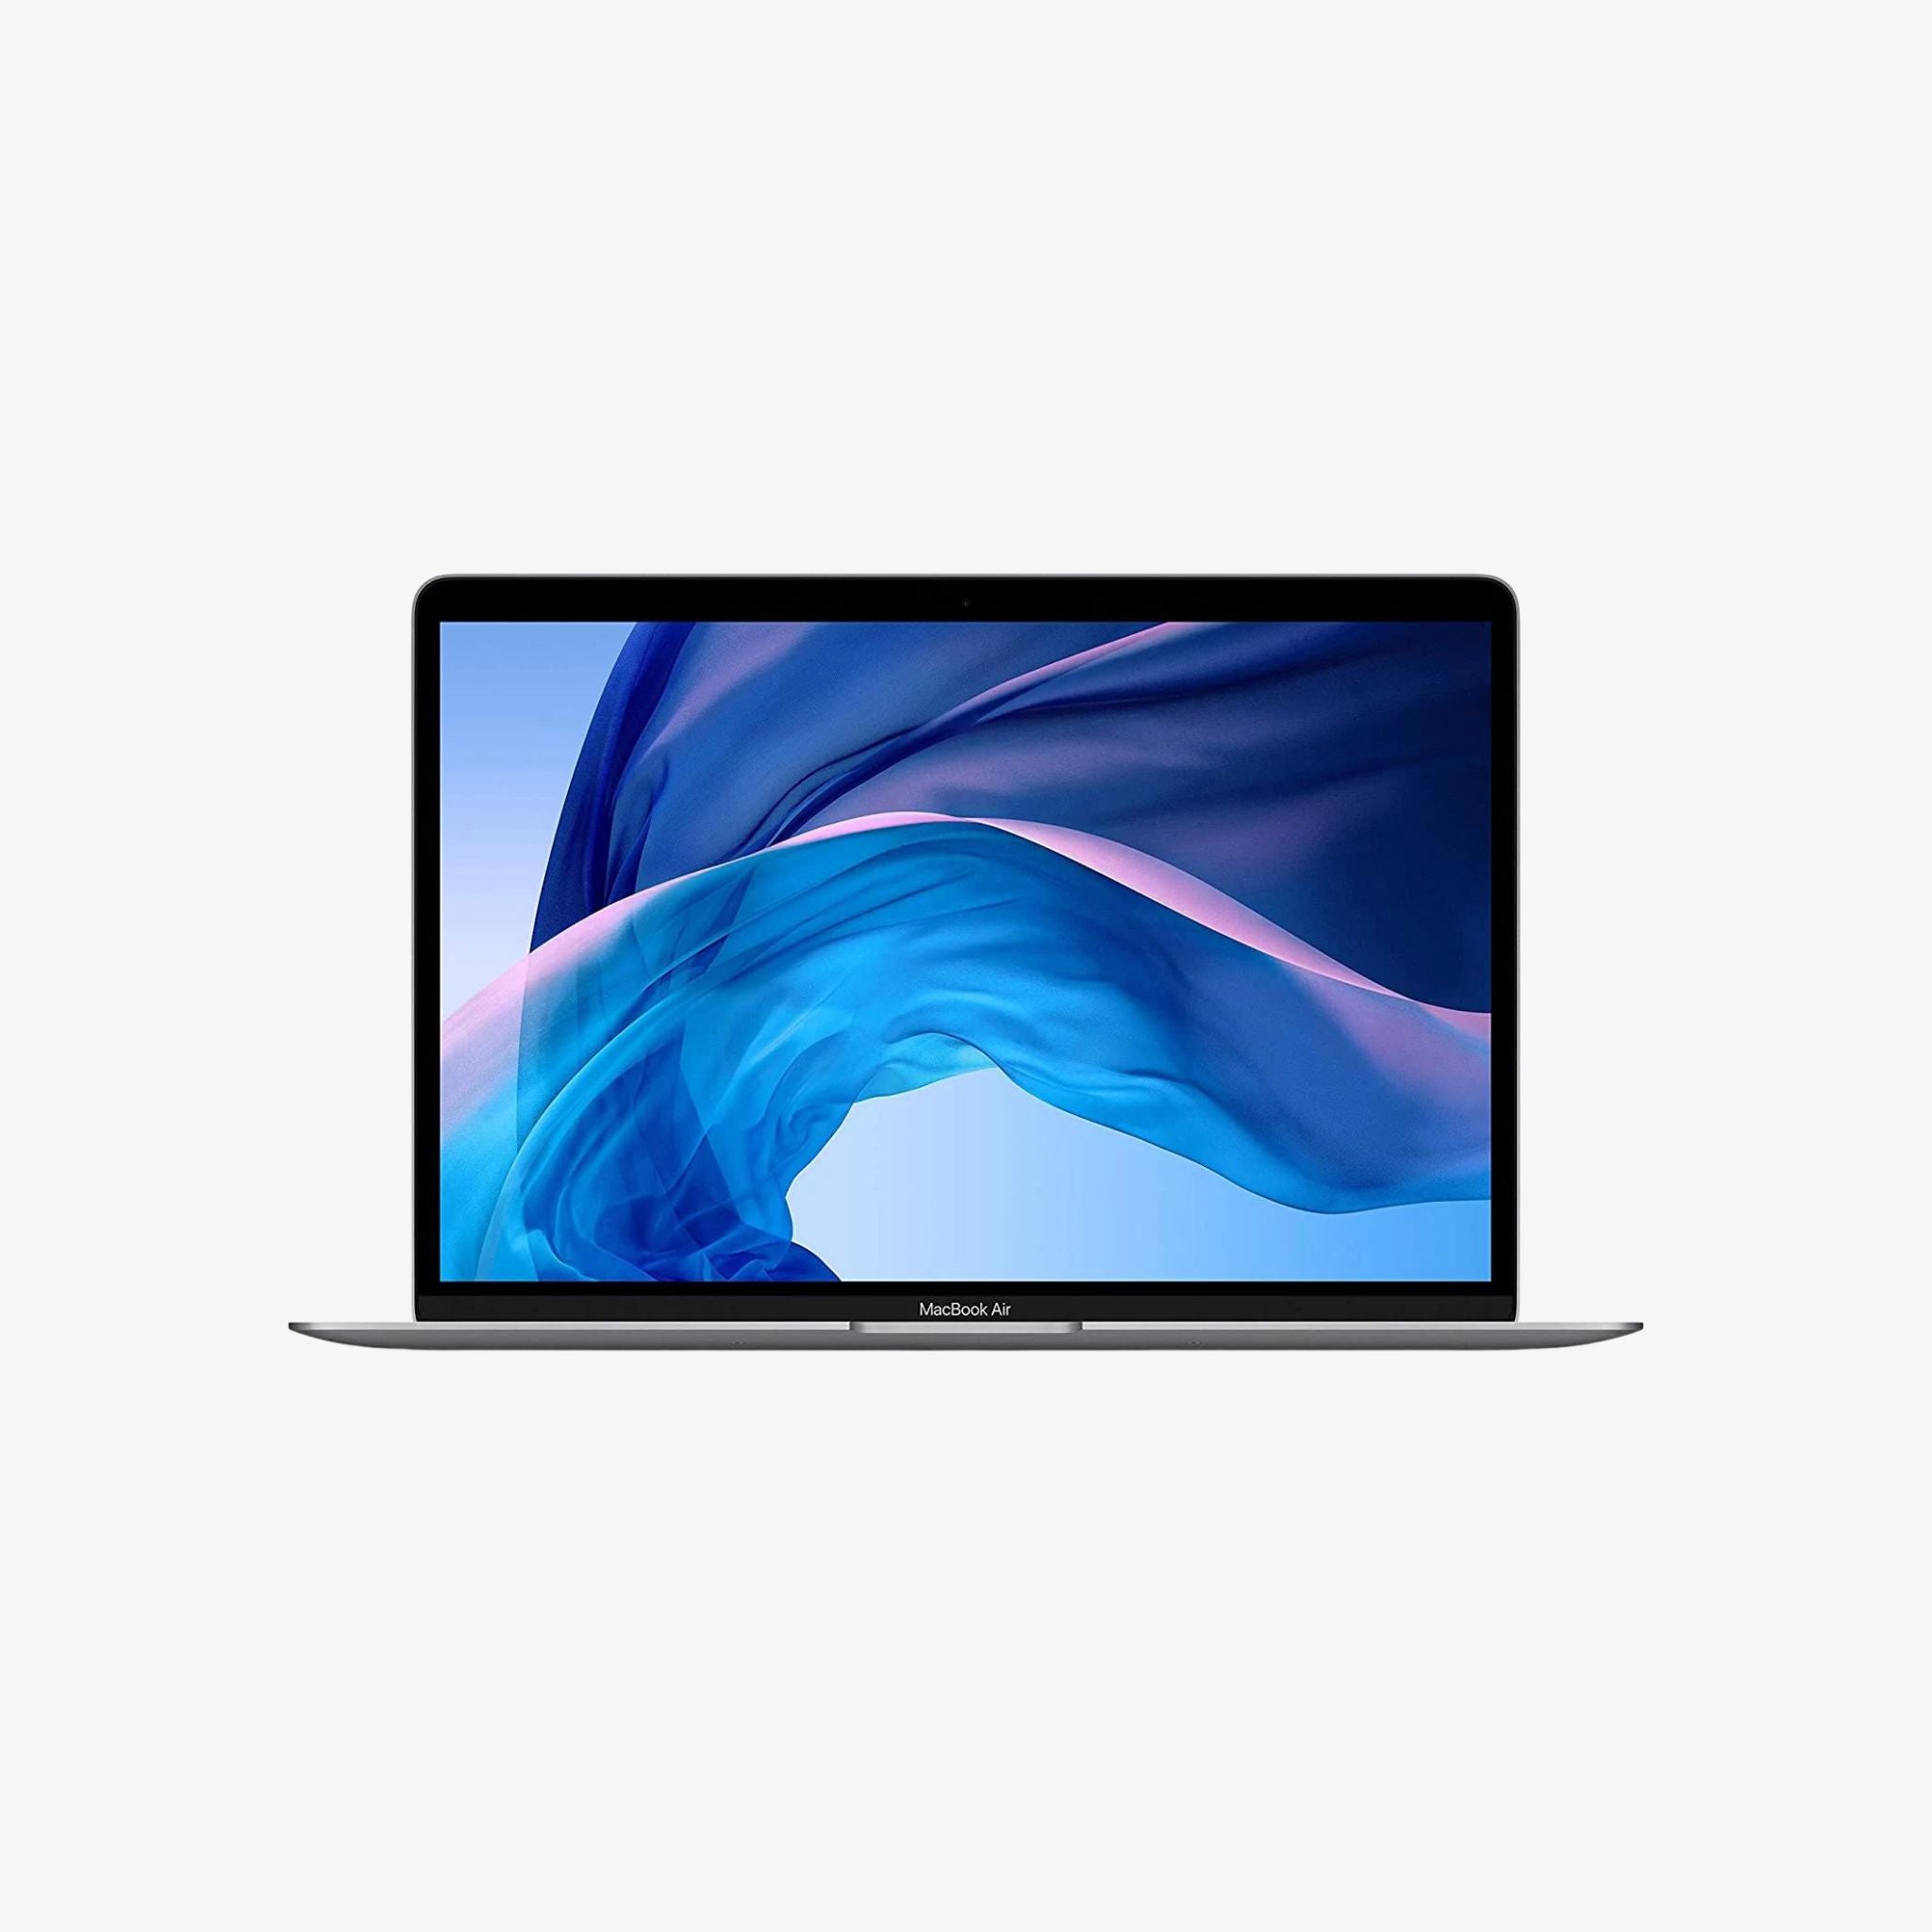 MacBook Air M1 - 8GB RAM (late 2020)